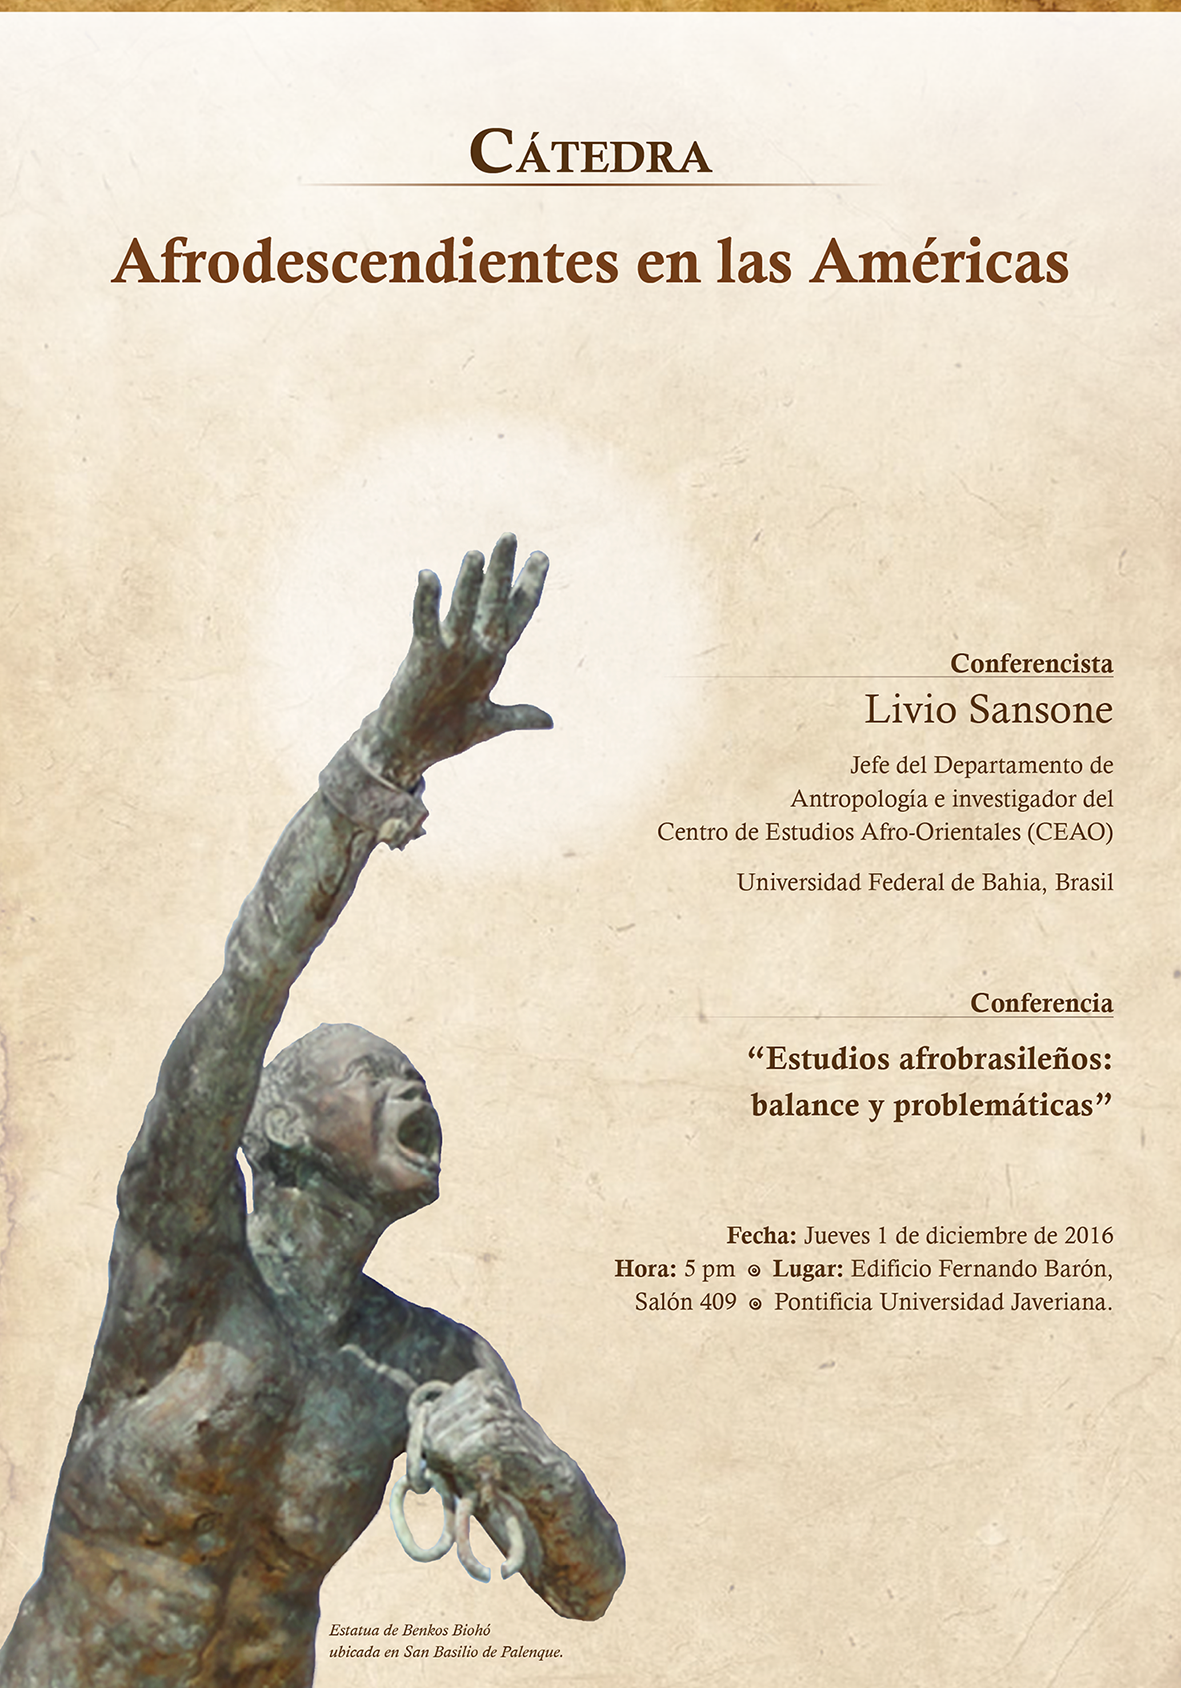 Gráfica alusiva a Cátedra Afrodescendientes en las Américas